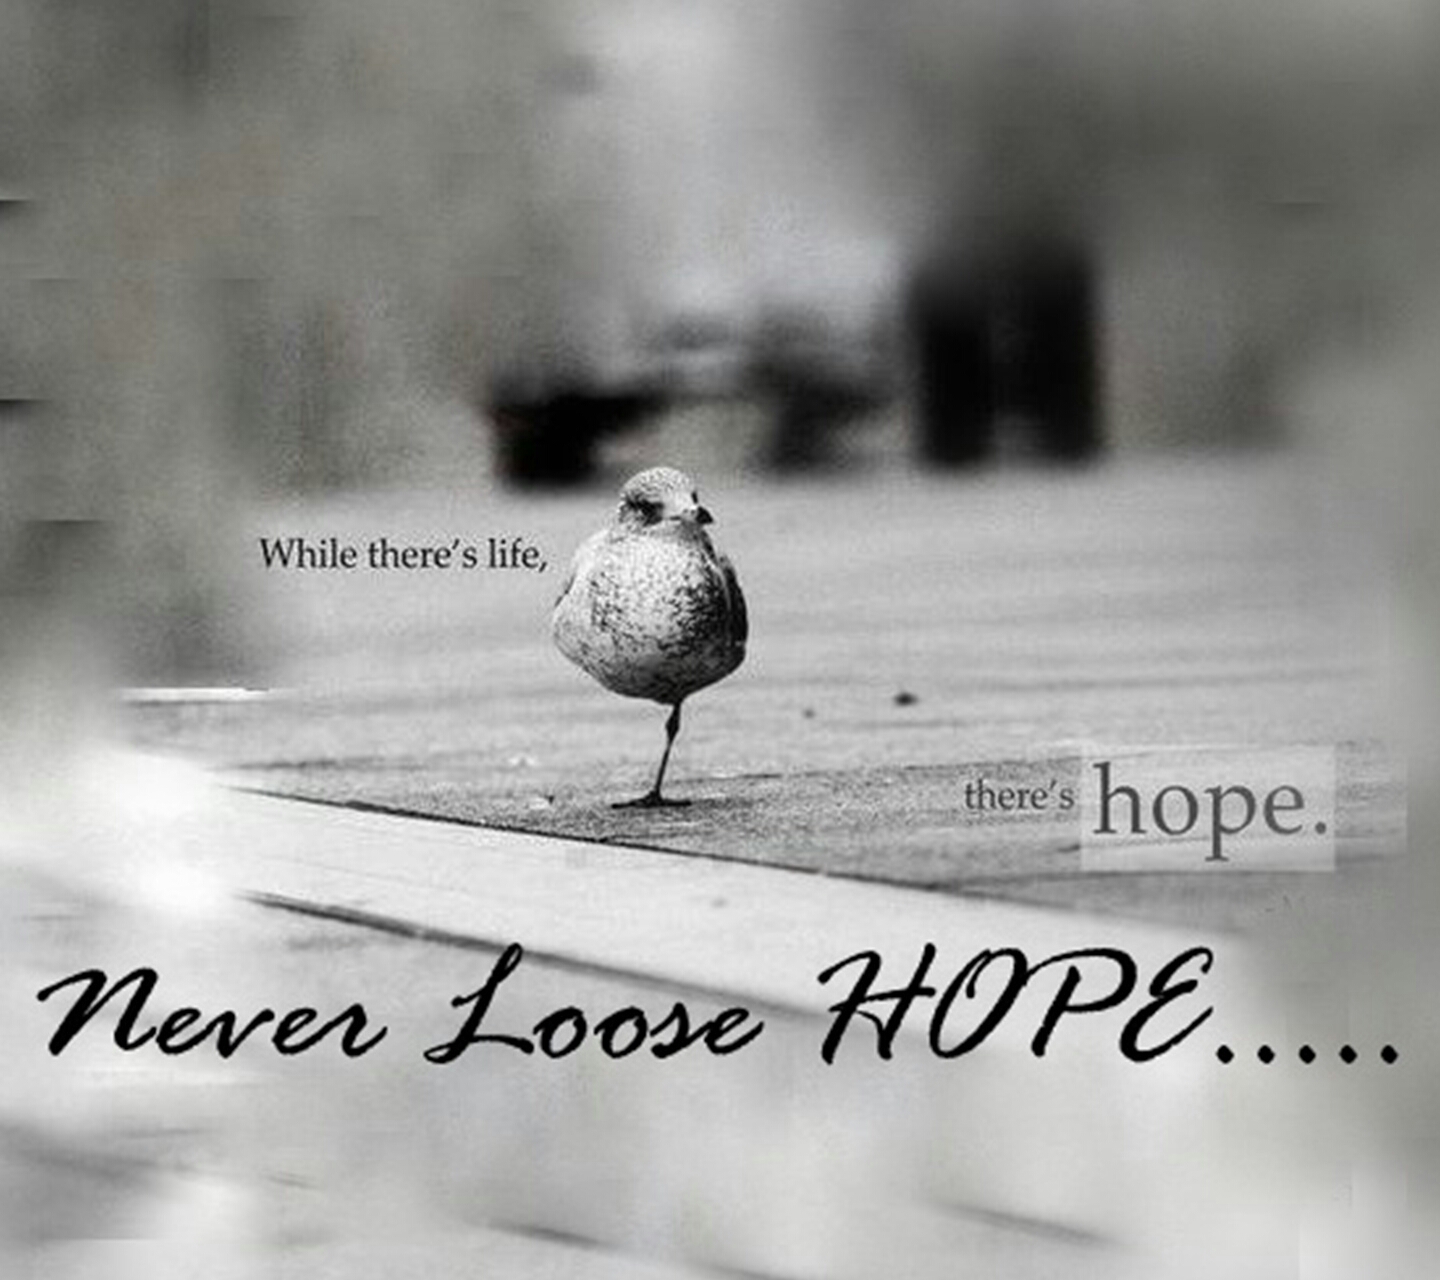 Lose hope. Never lose hope. Don't lose hope image.